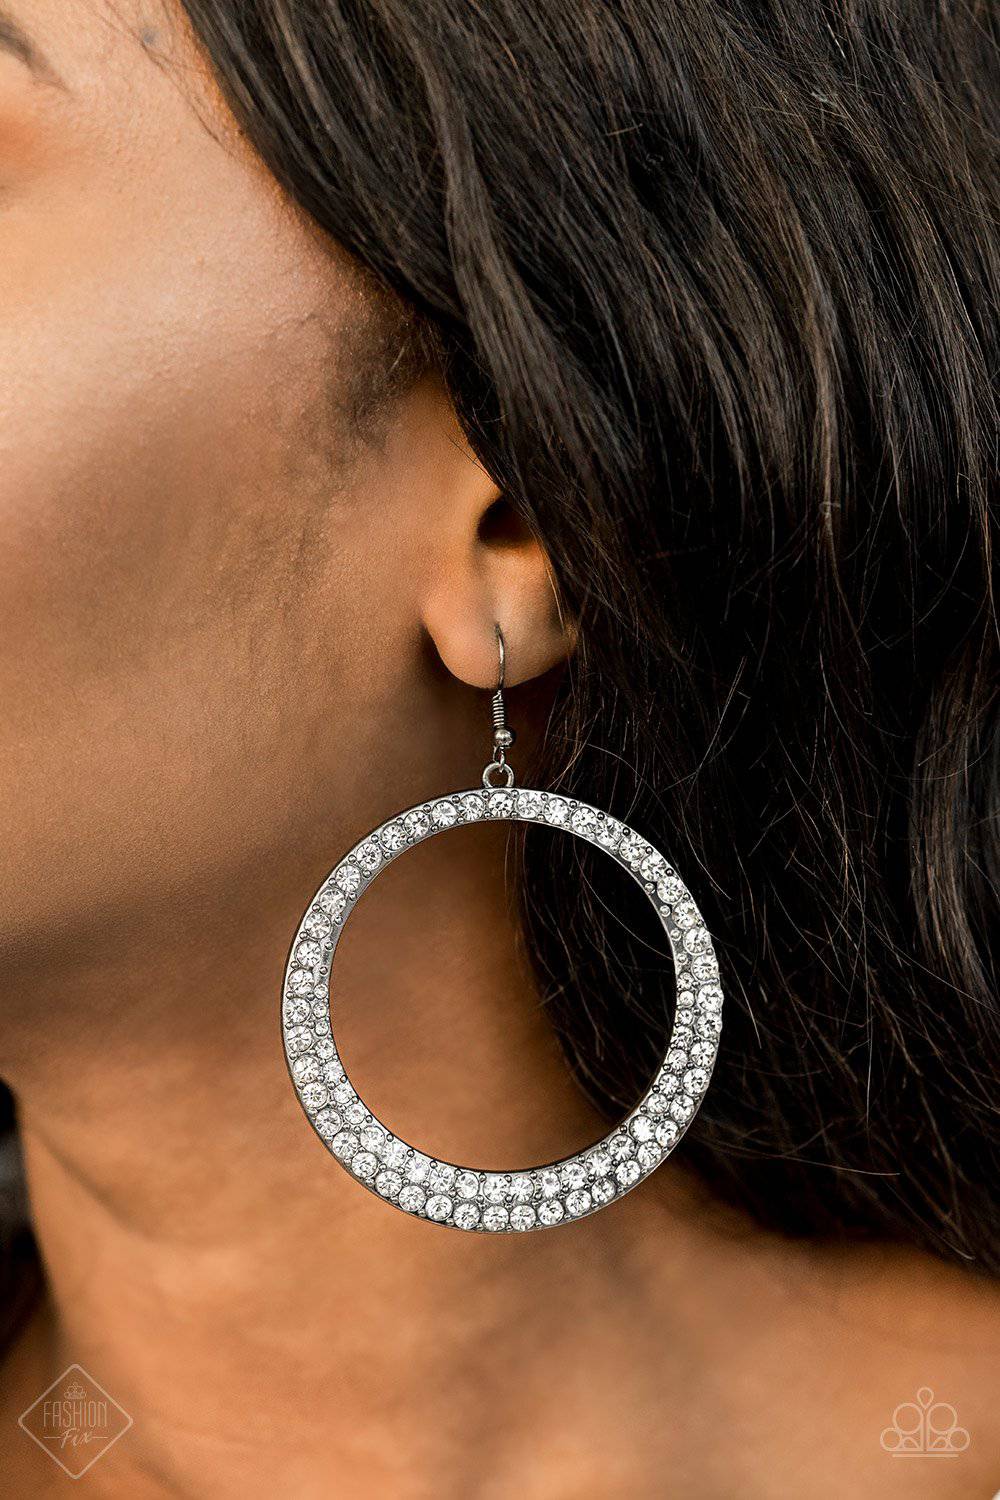 So Demanding - Black Rhinestone Earrings - Paparazzi Accessories - GlaMarous Titi Jewels